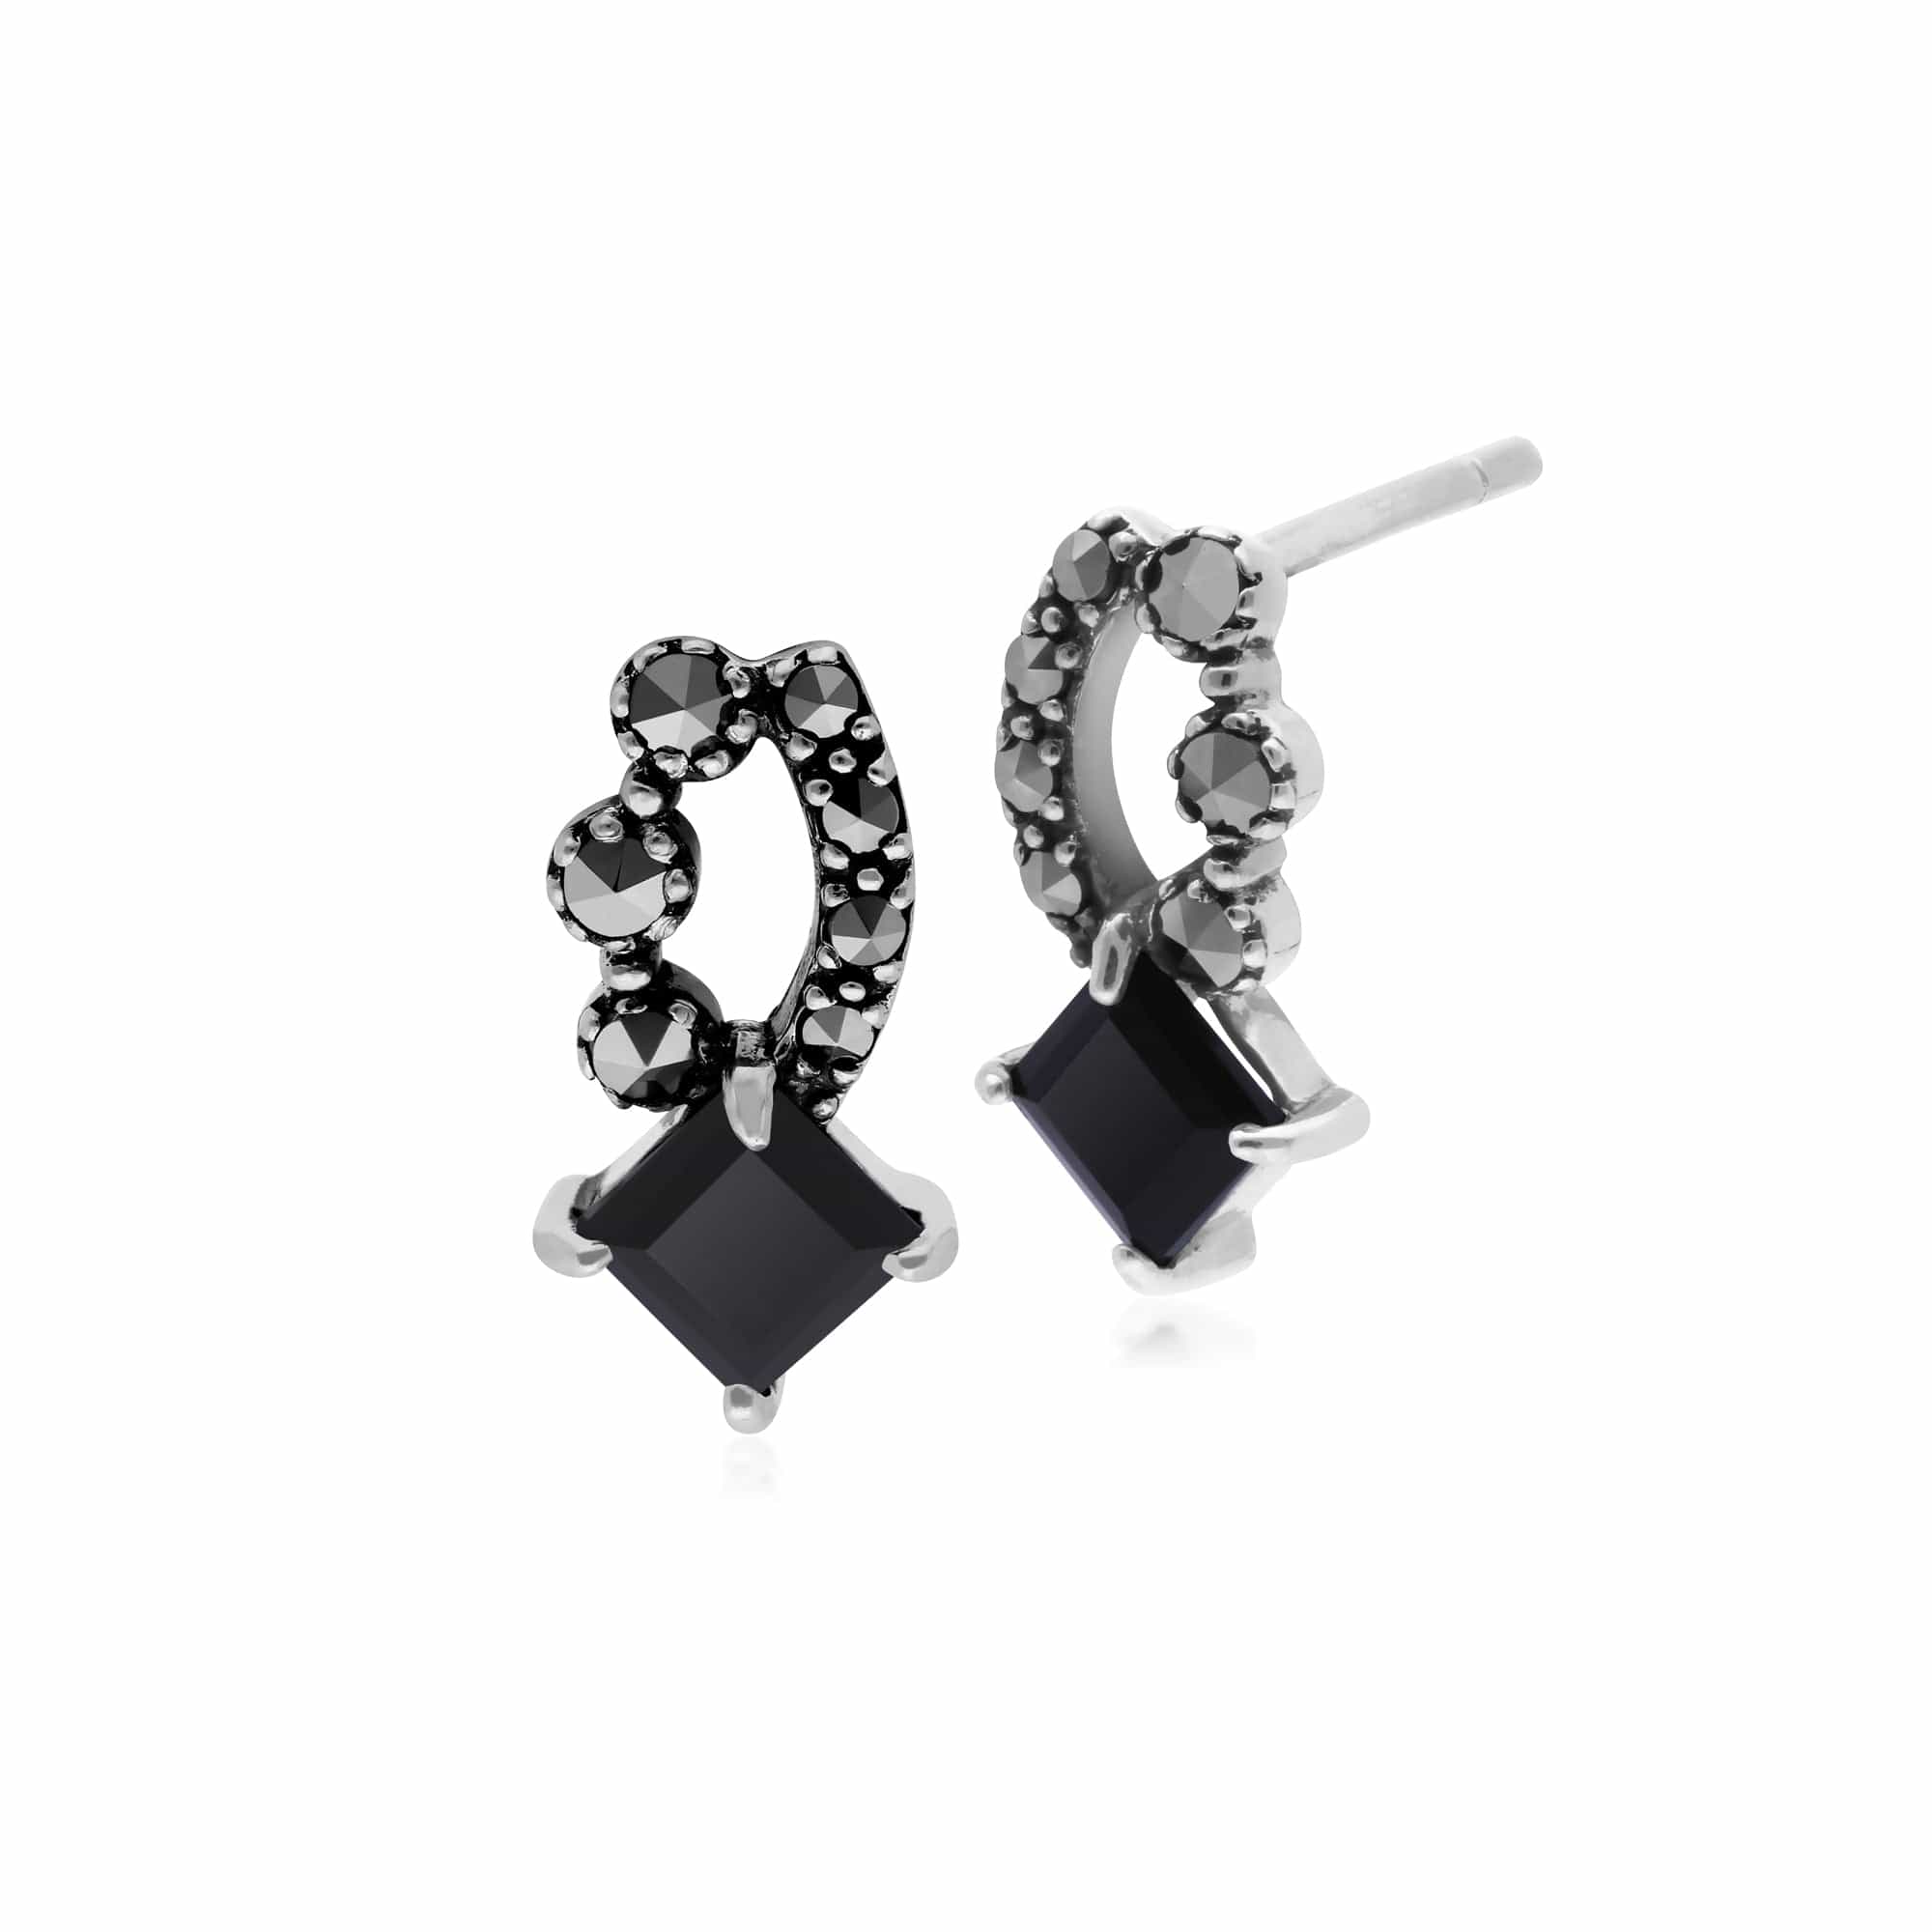 Art Nouveau Style Square Black Onyx  & Marcasite Stud Earrings in 925 Sterling Silver  - Gemondo